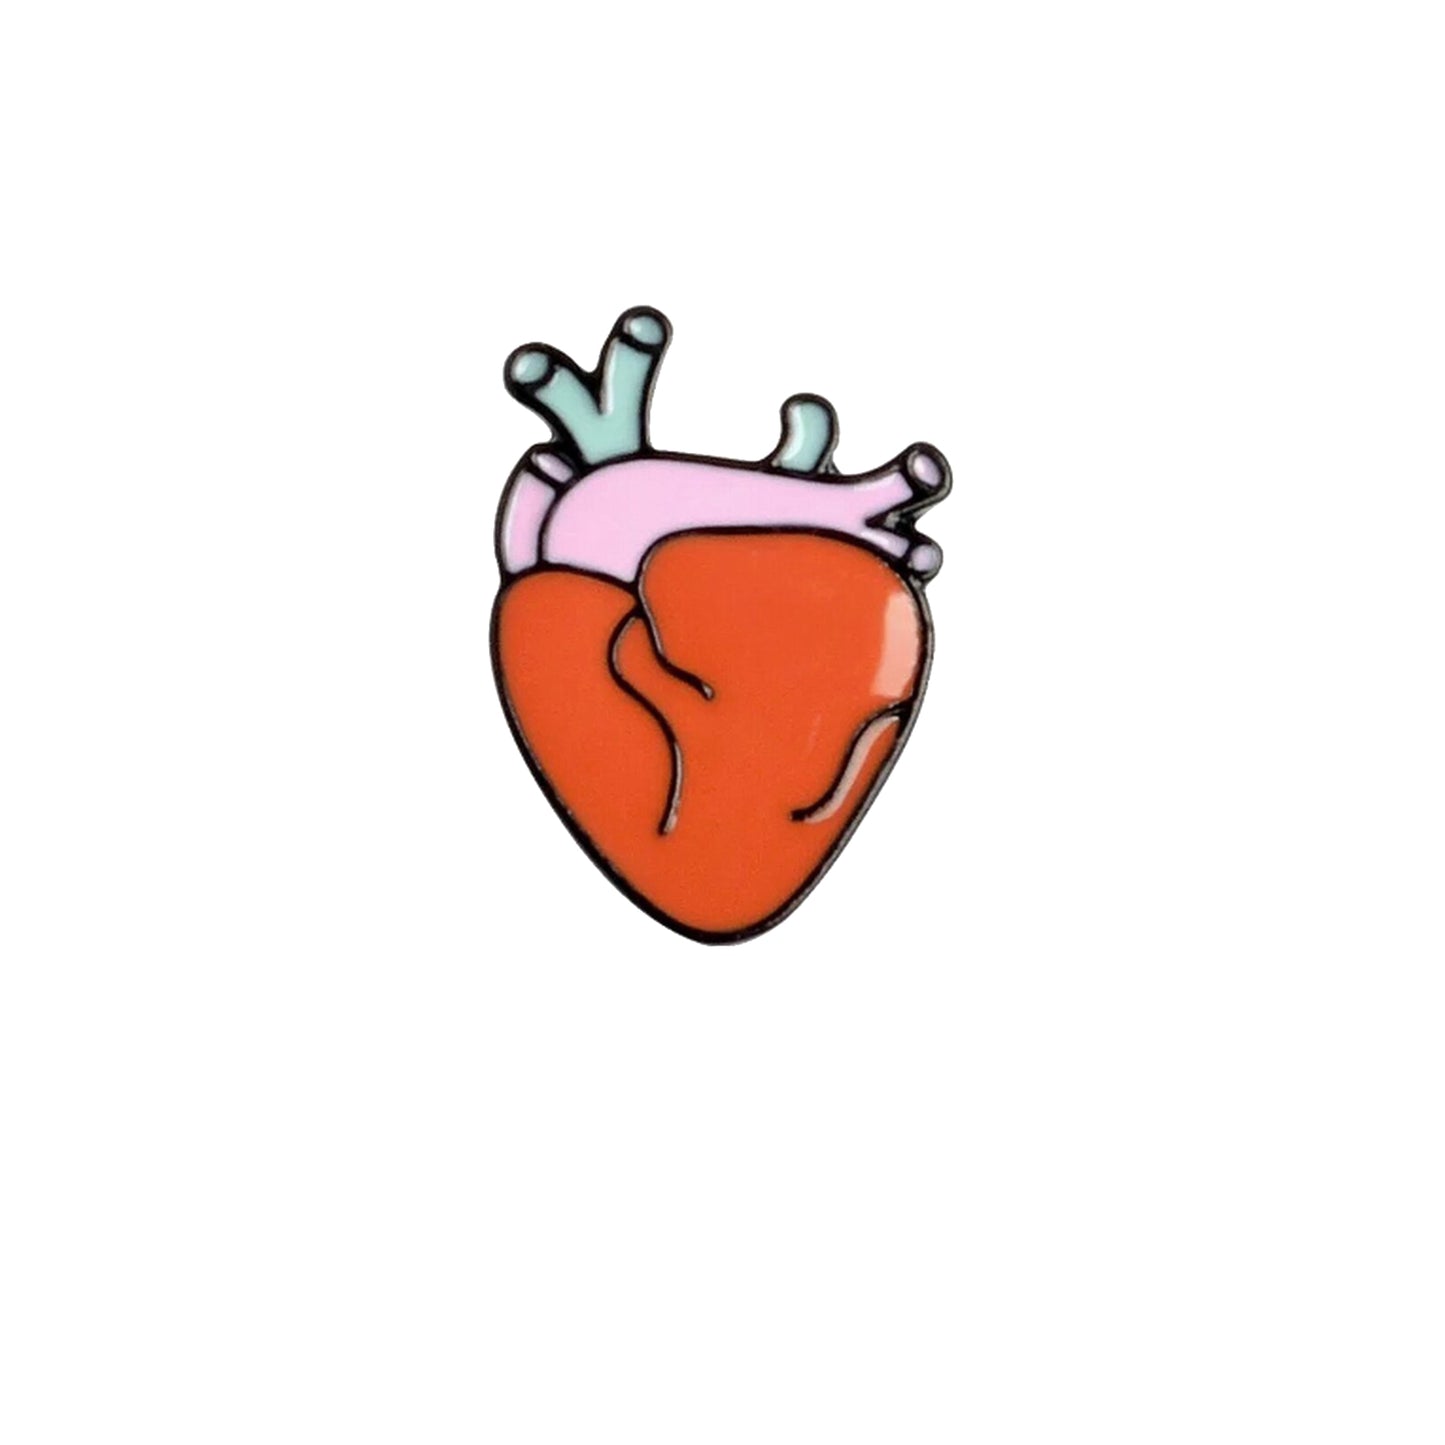 Human Heart Pin